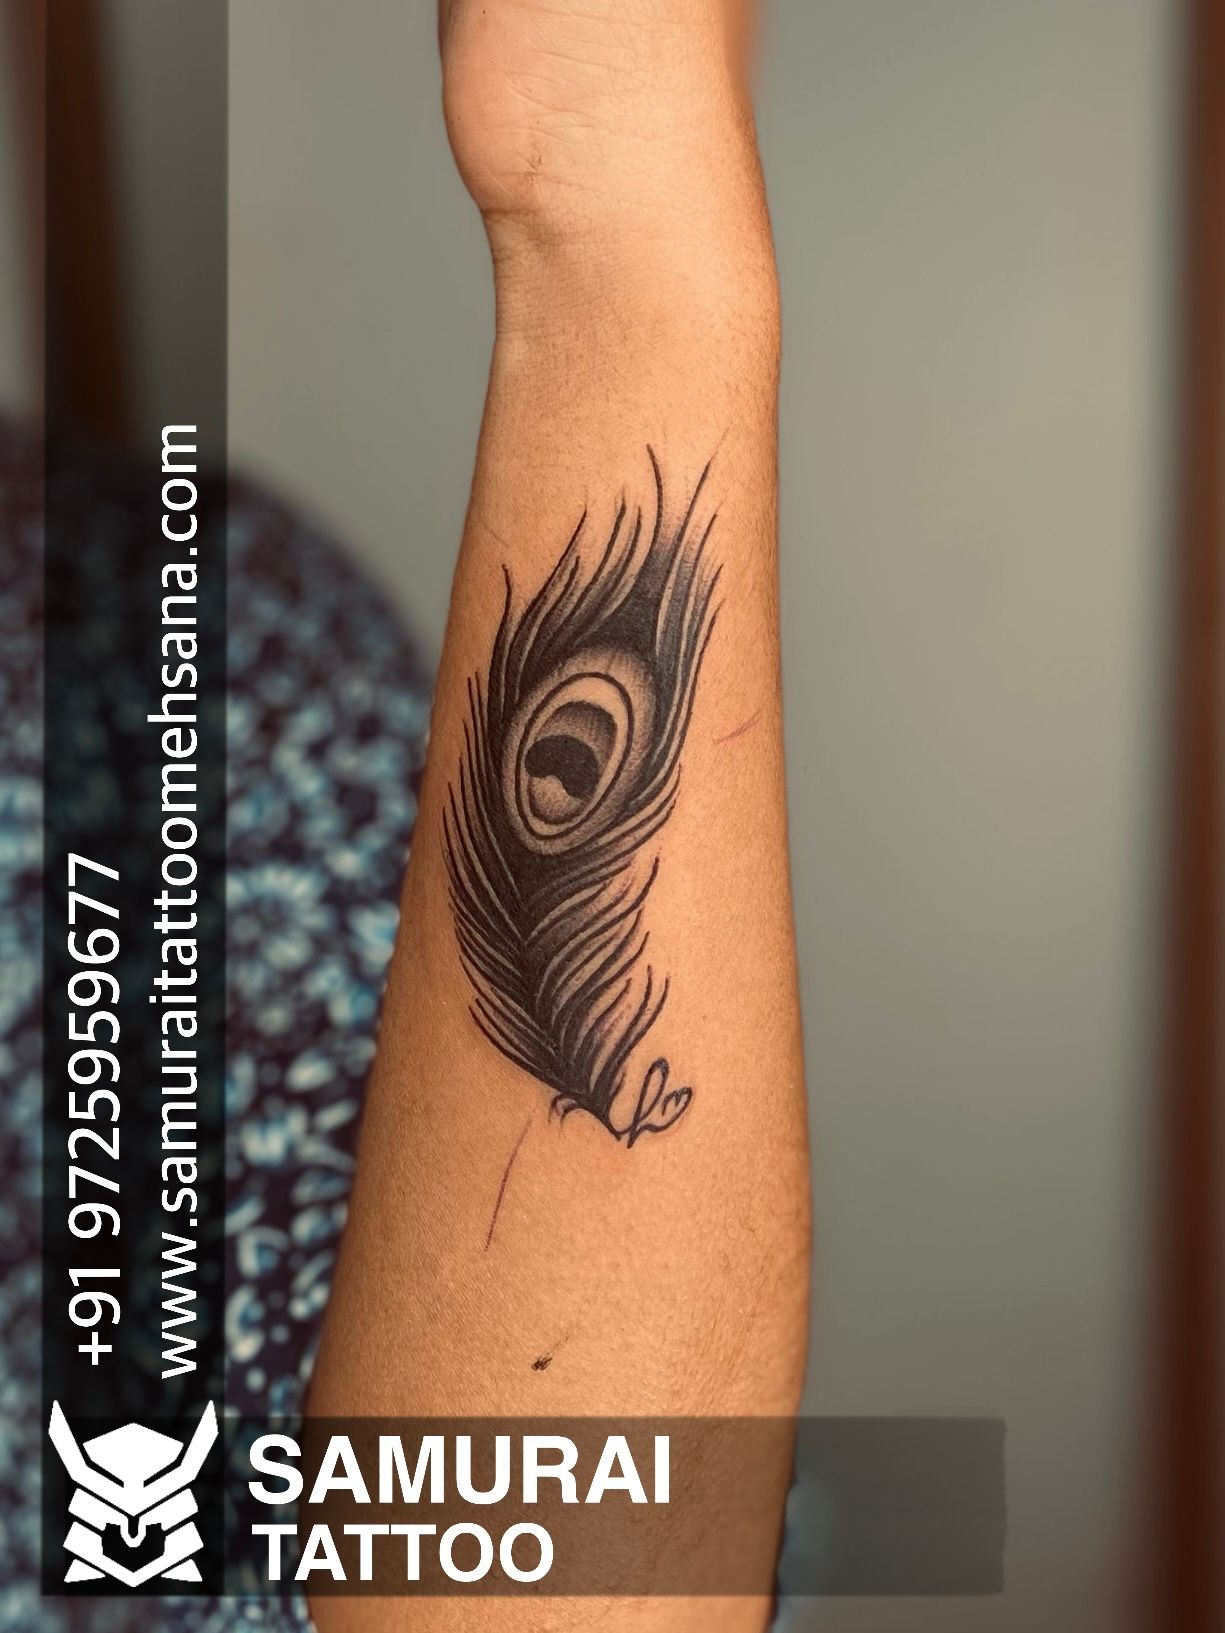 How to make beautiful peacock feather Tattoo||Coloured tattoo - YouTube